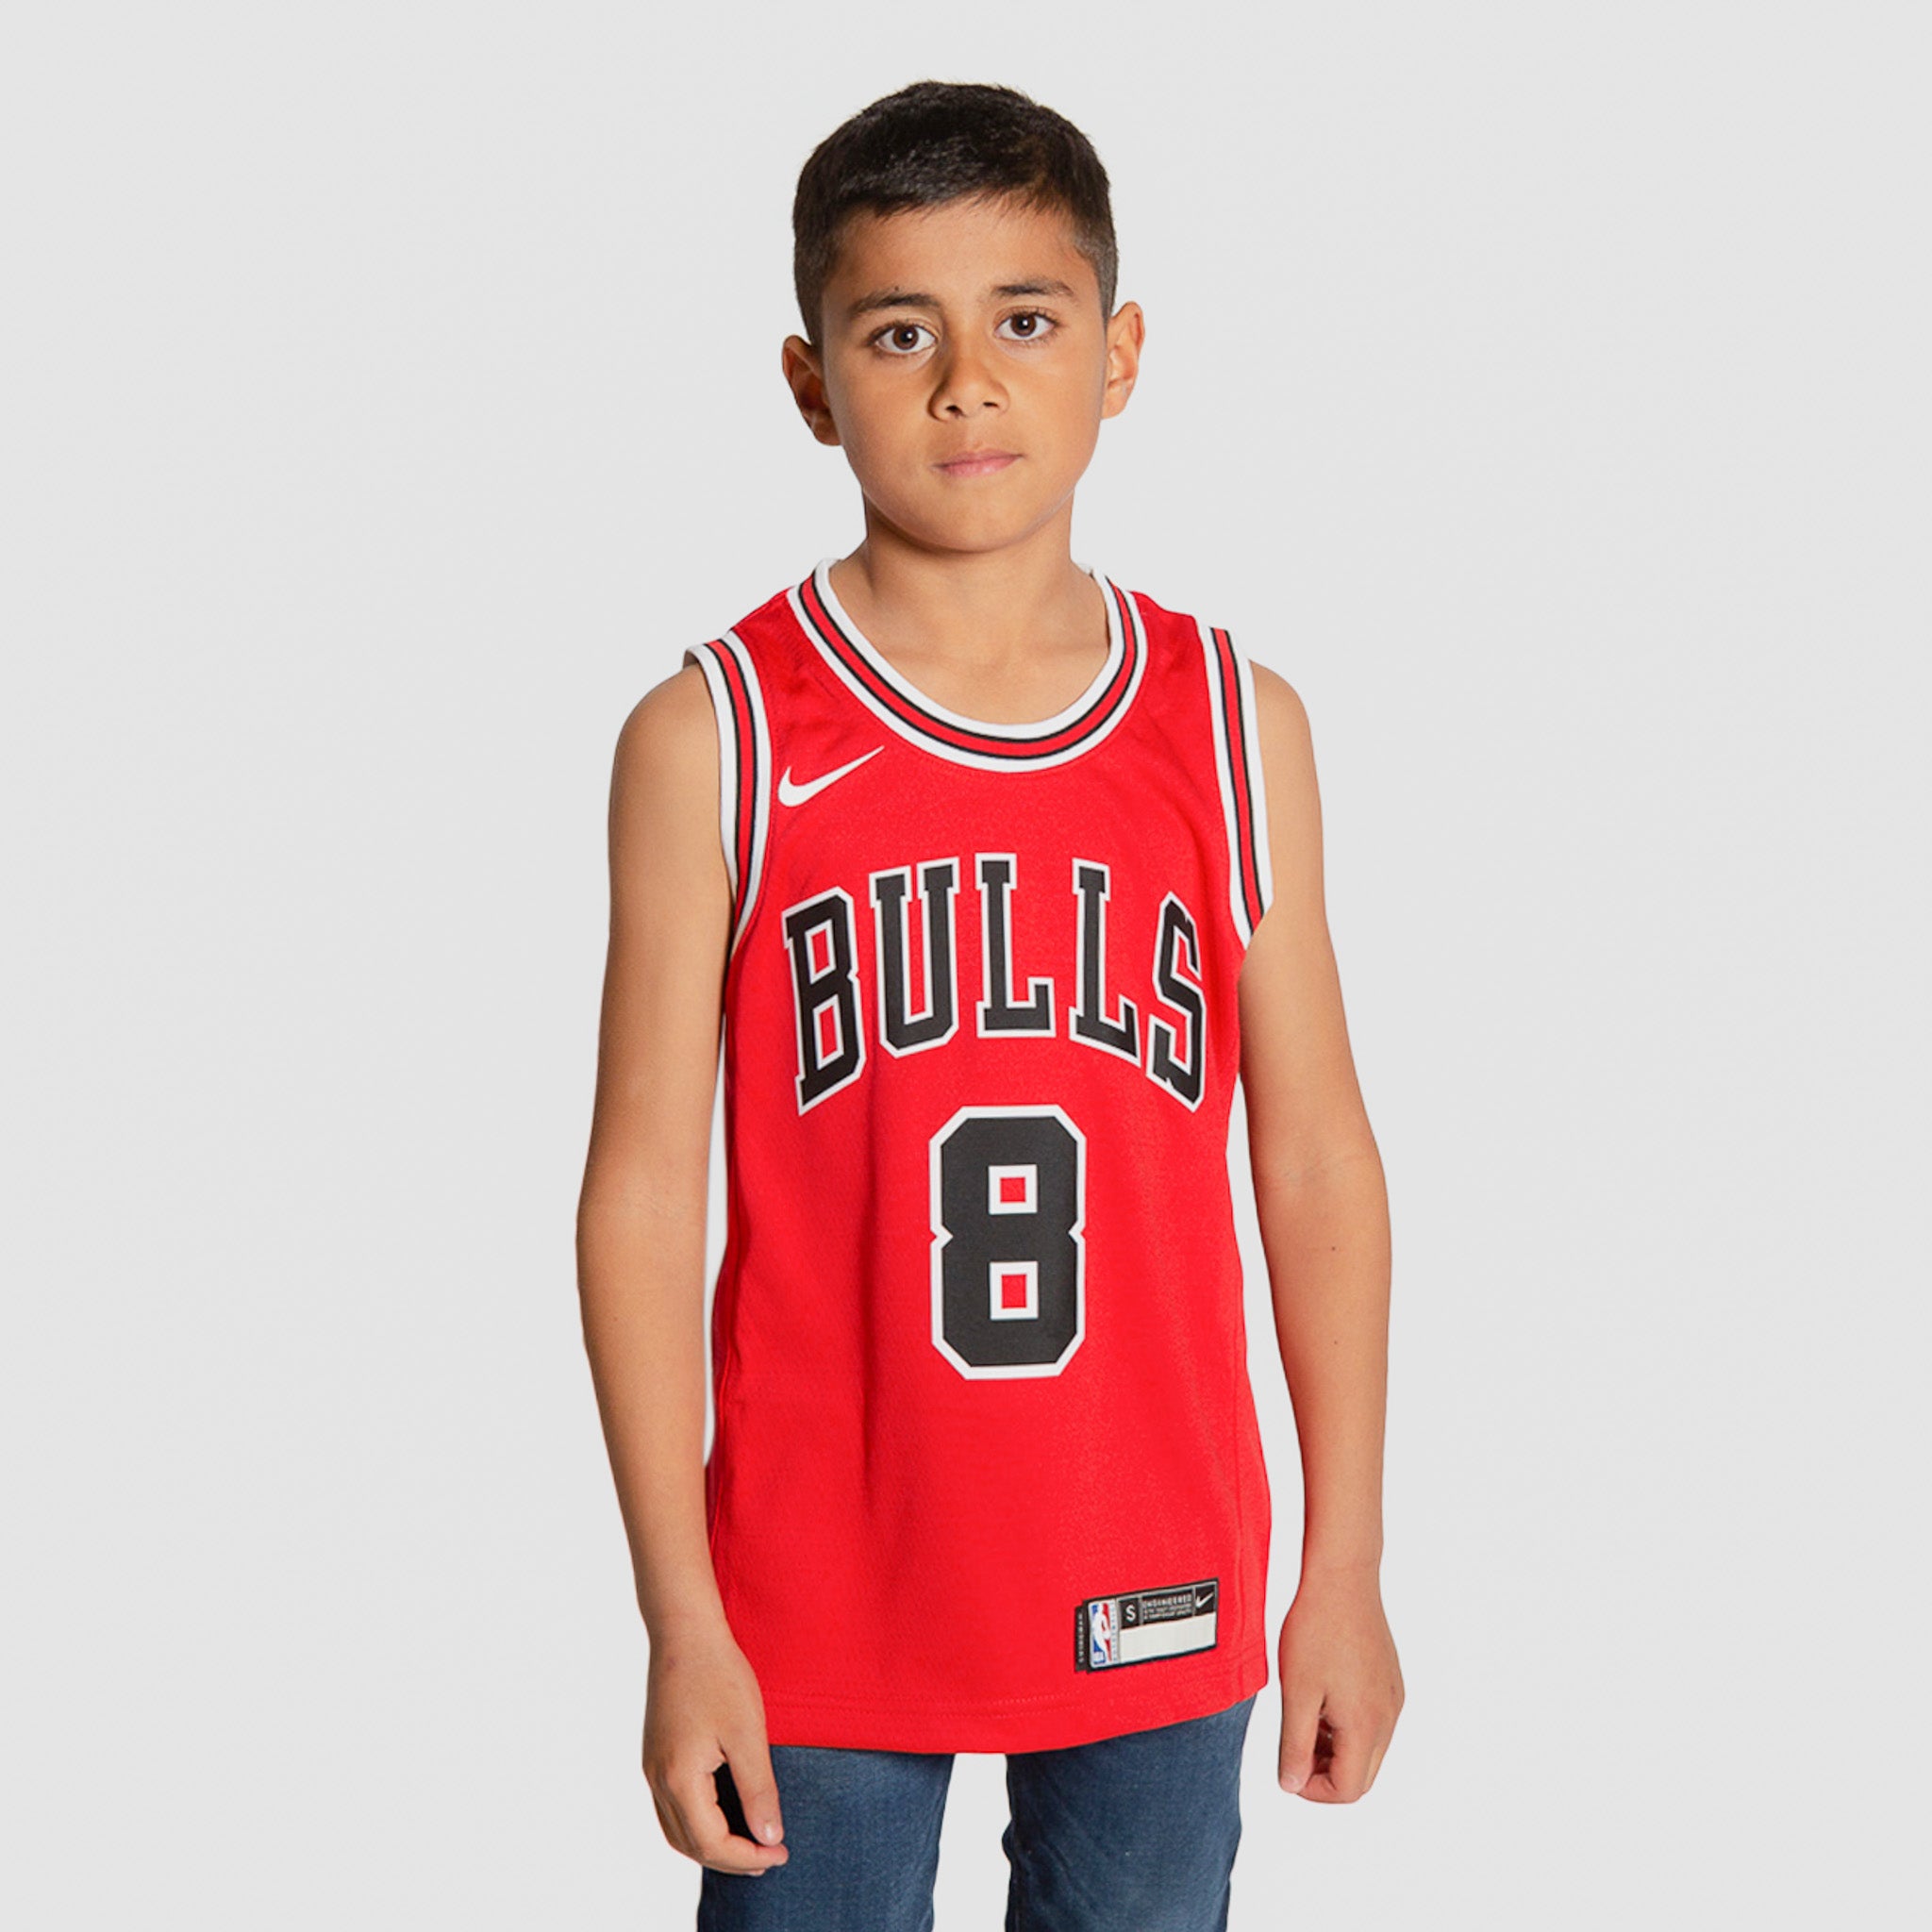 Chicago Bulls Zach LaVine Nike Red 2022 NBA Swingman Jersey City Edition  Large 